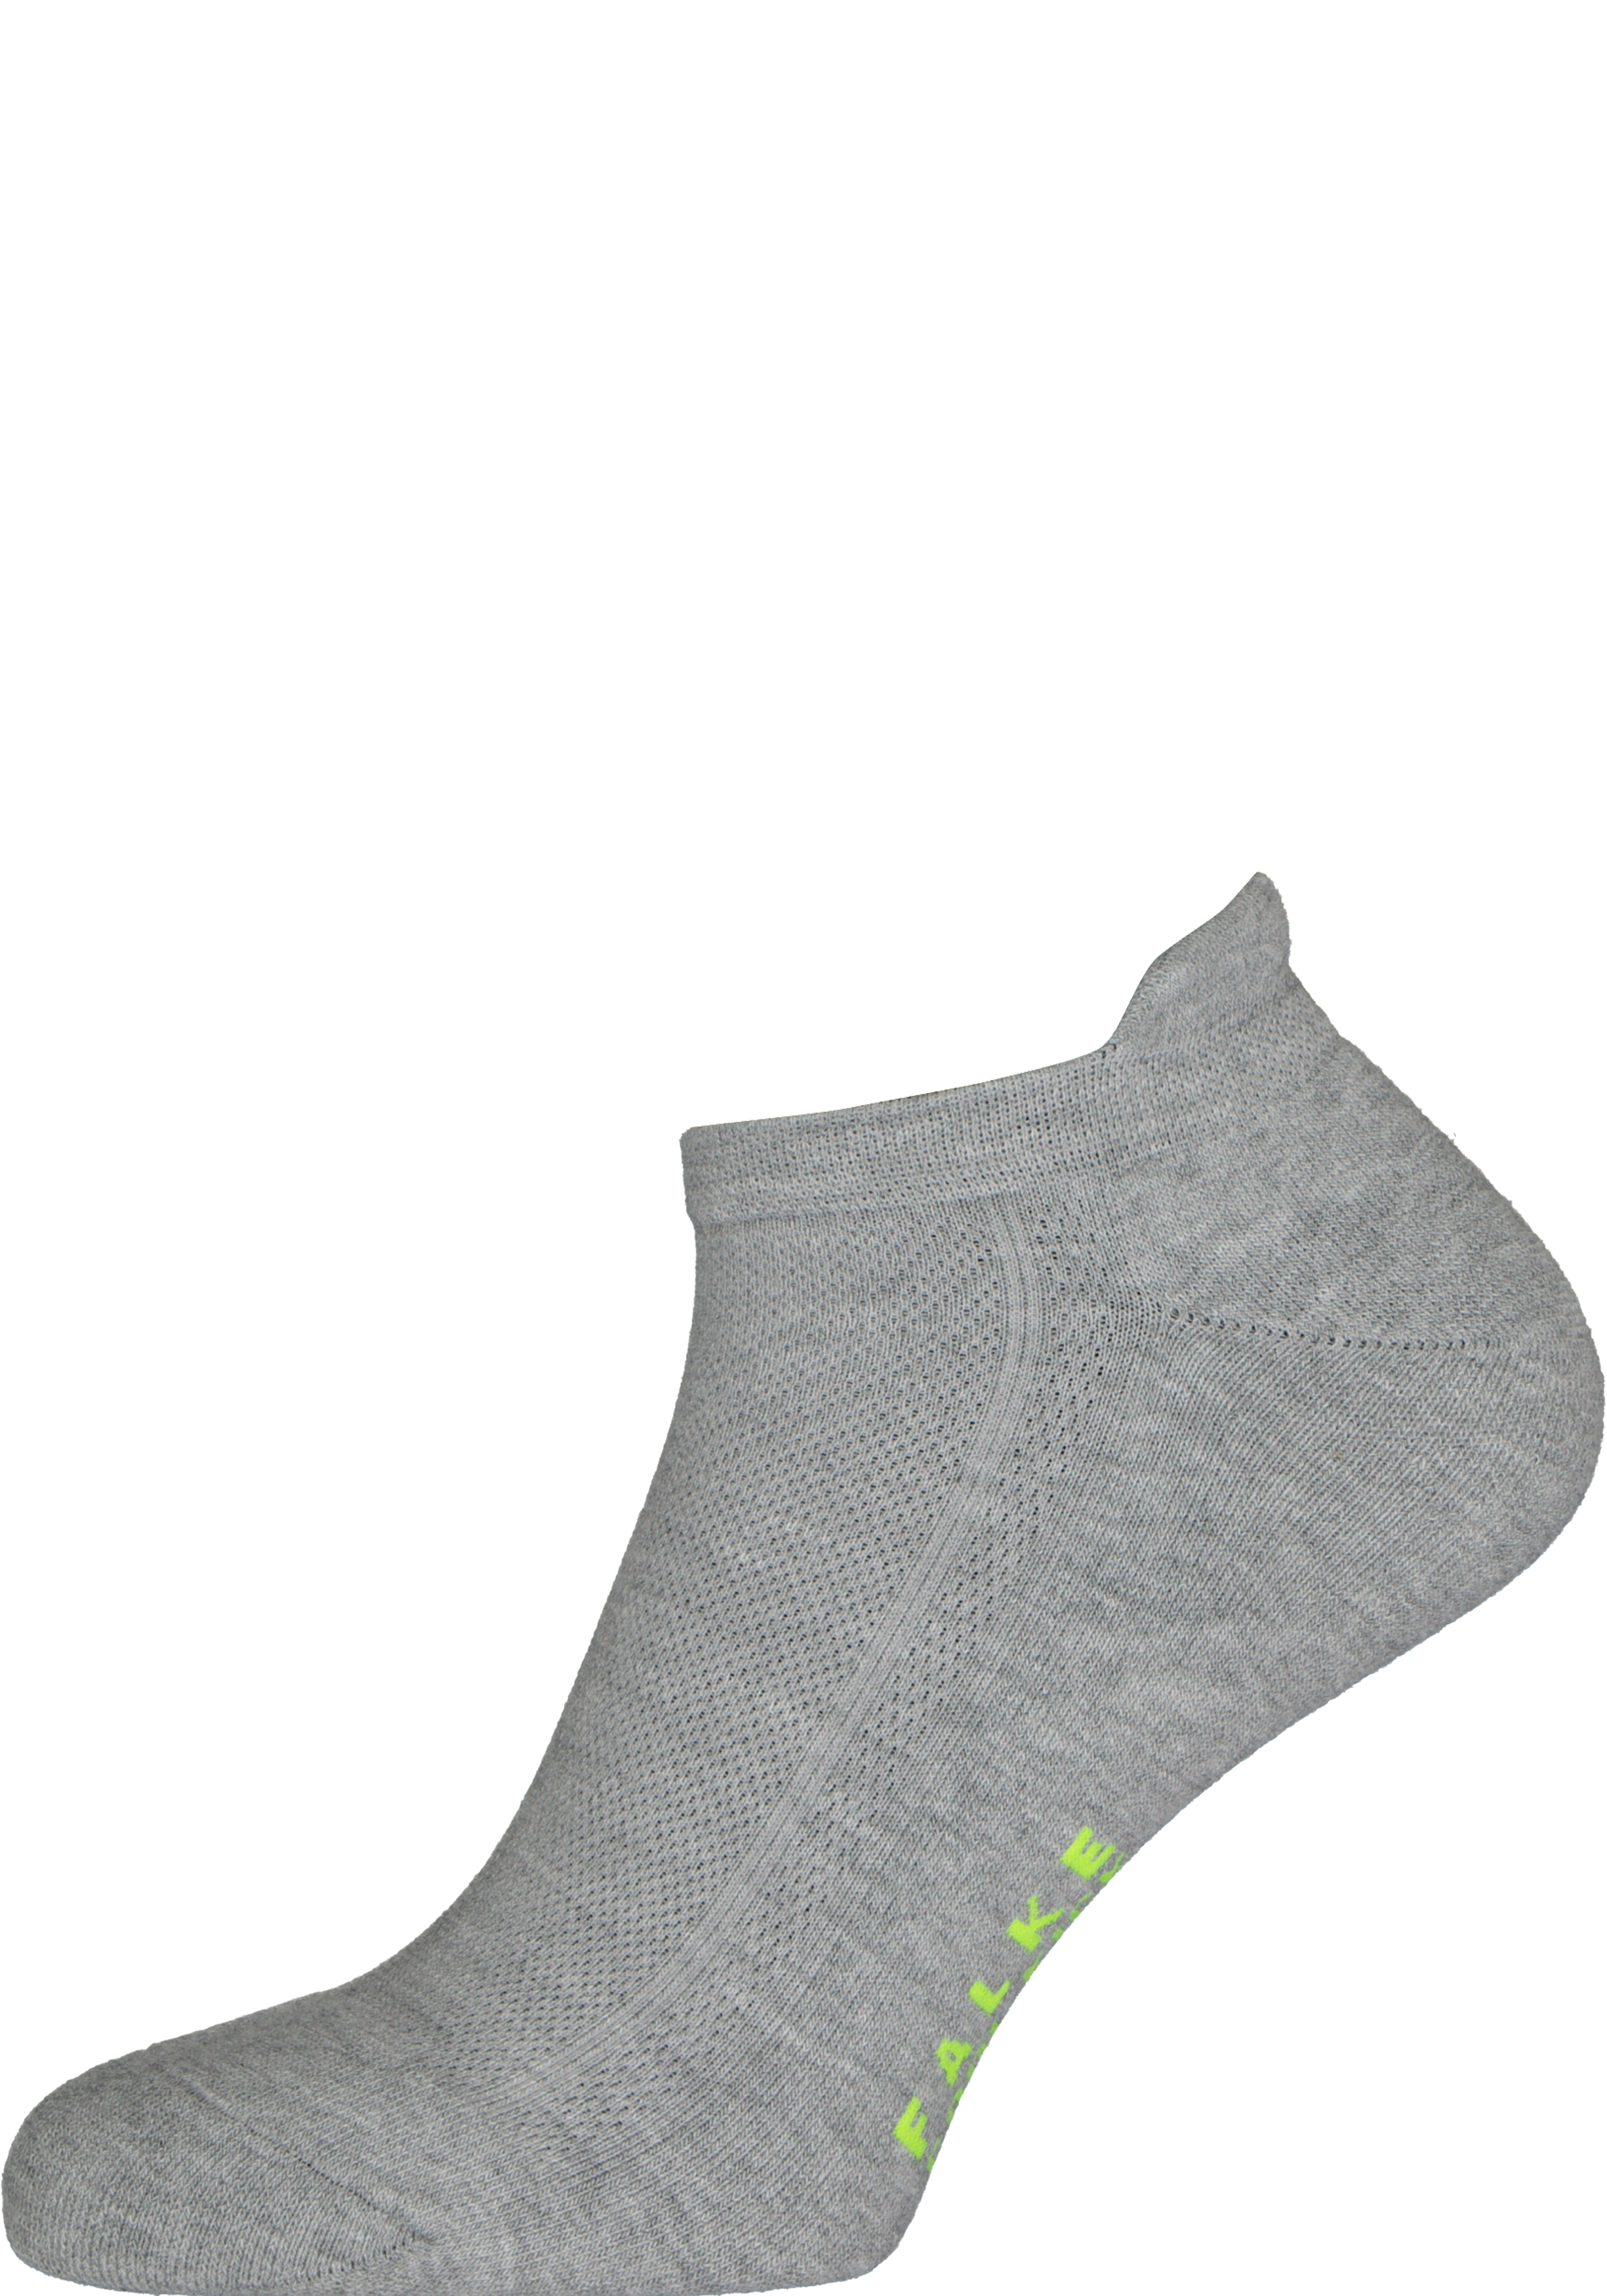 FALKE Cool Kick unisex enkelsokken, lichtgrijs (light grey)